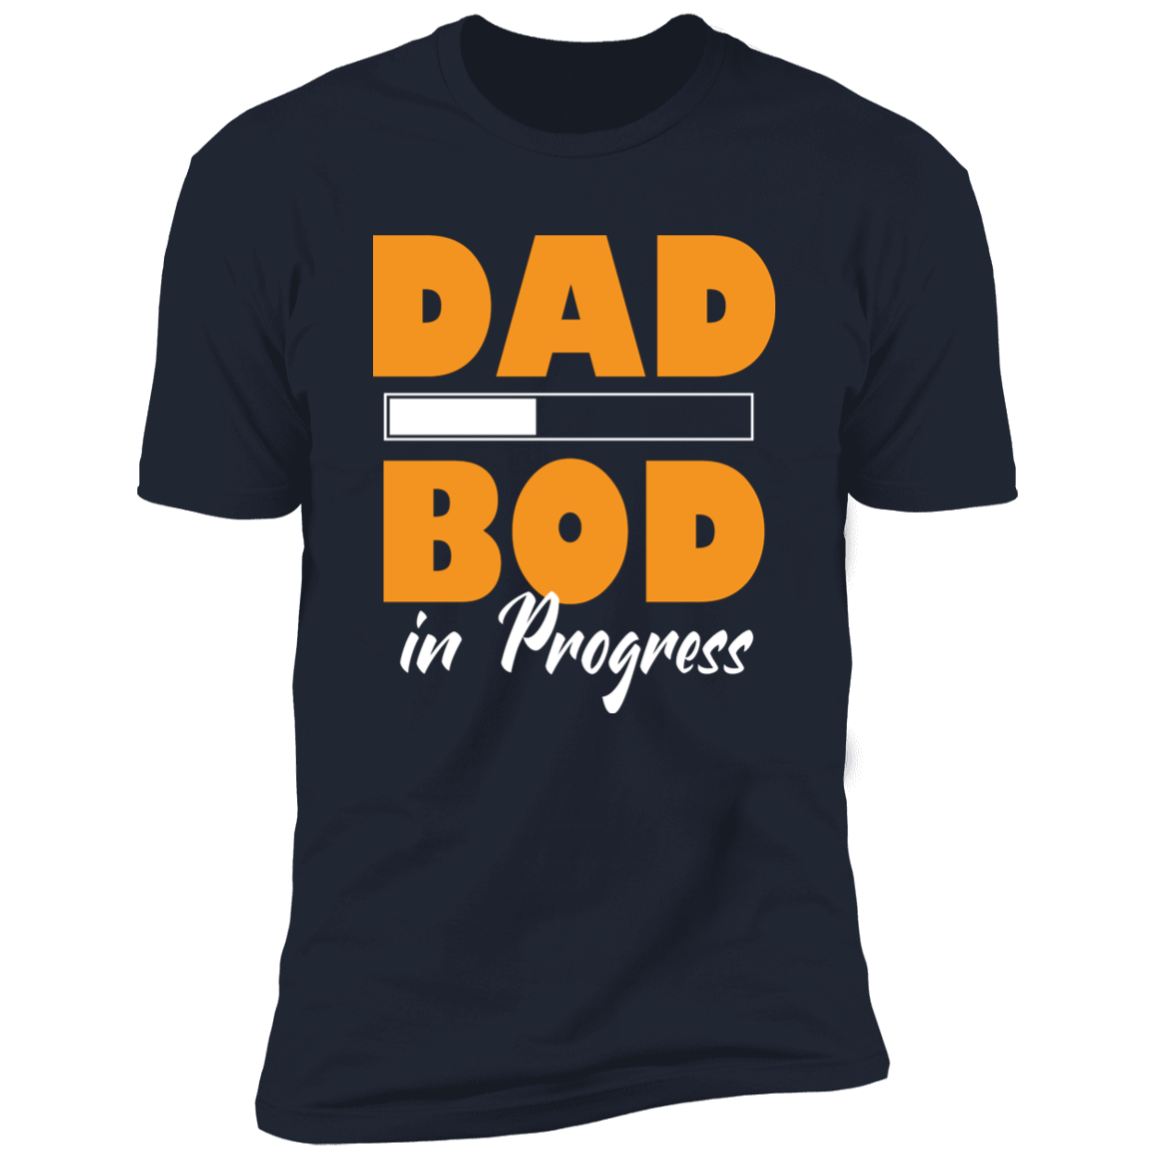 Dad Bod in Progress T-Shirt